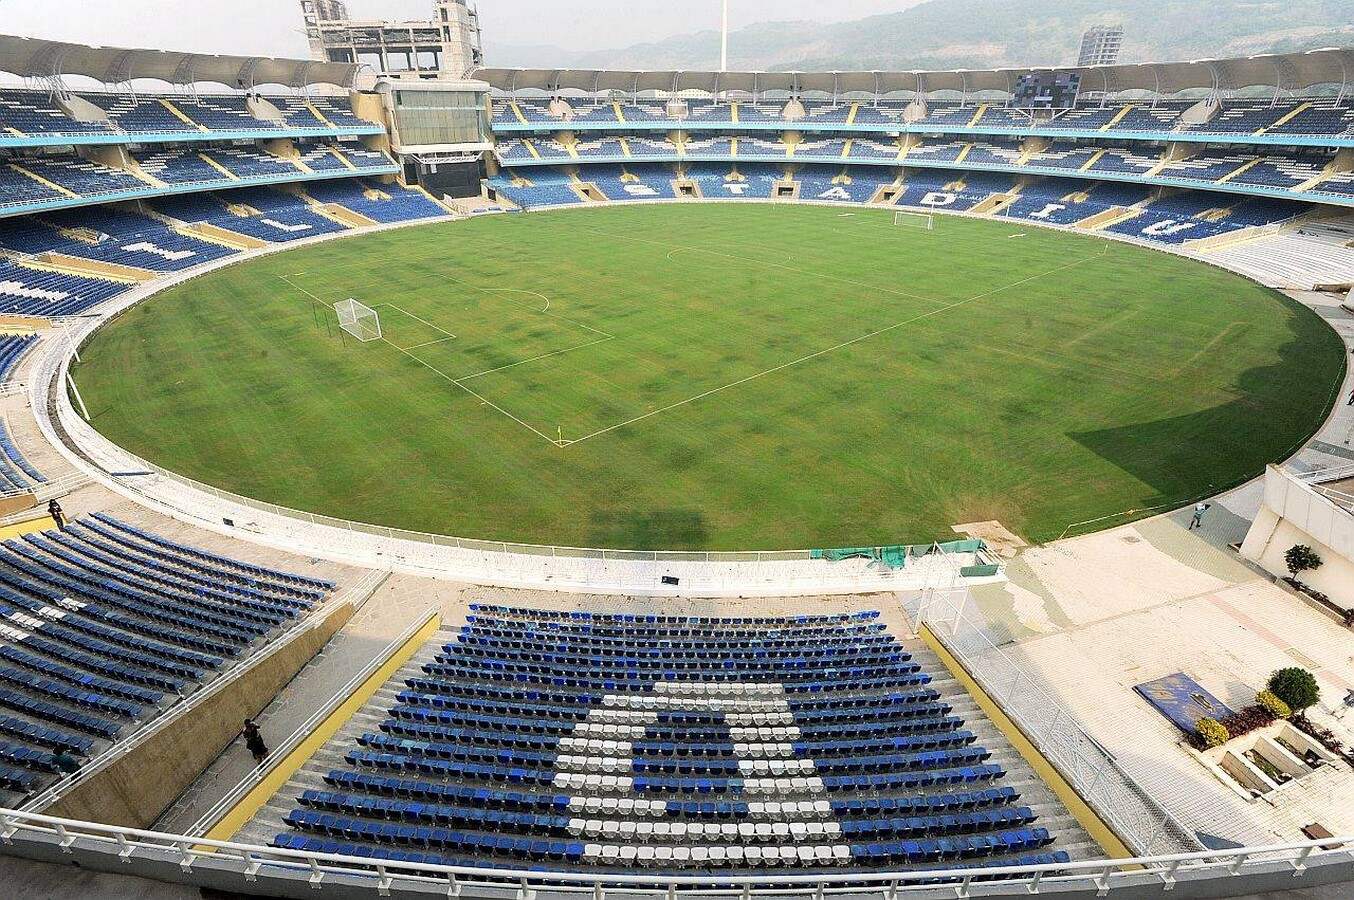 17-astounding-facts-about-rajiv-gandhi-international-cricket-stadium